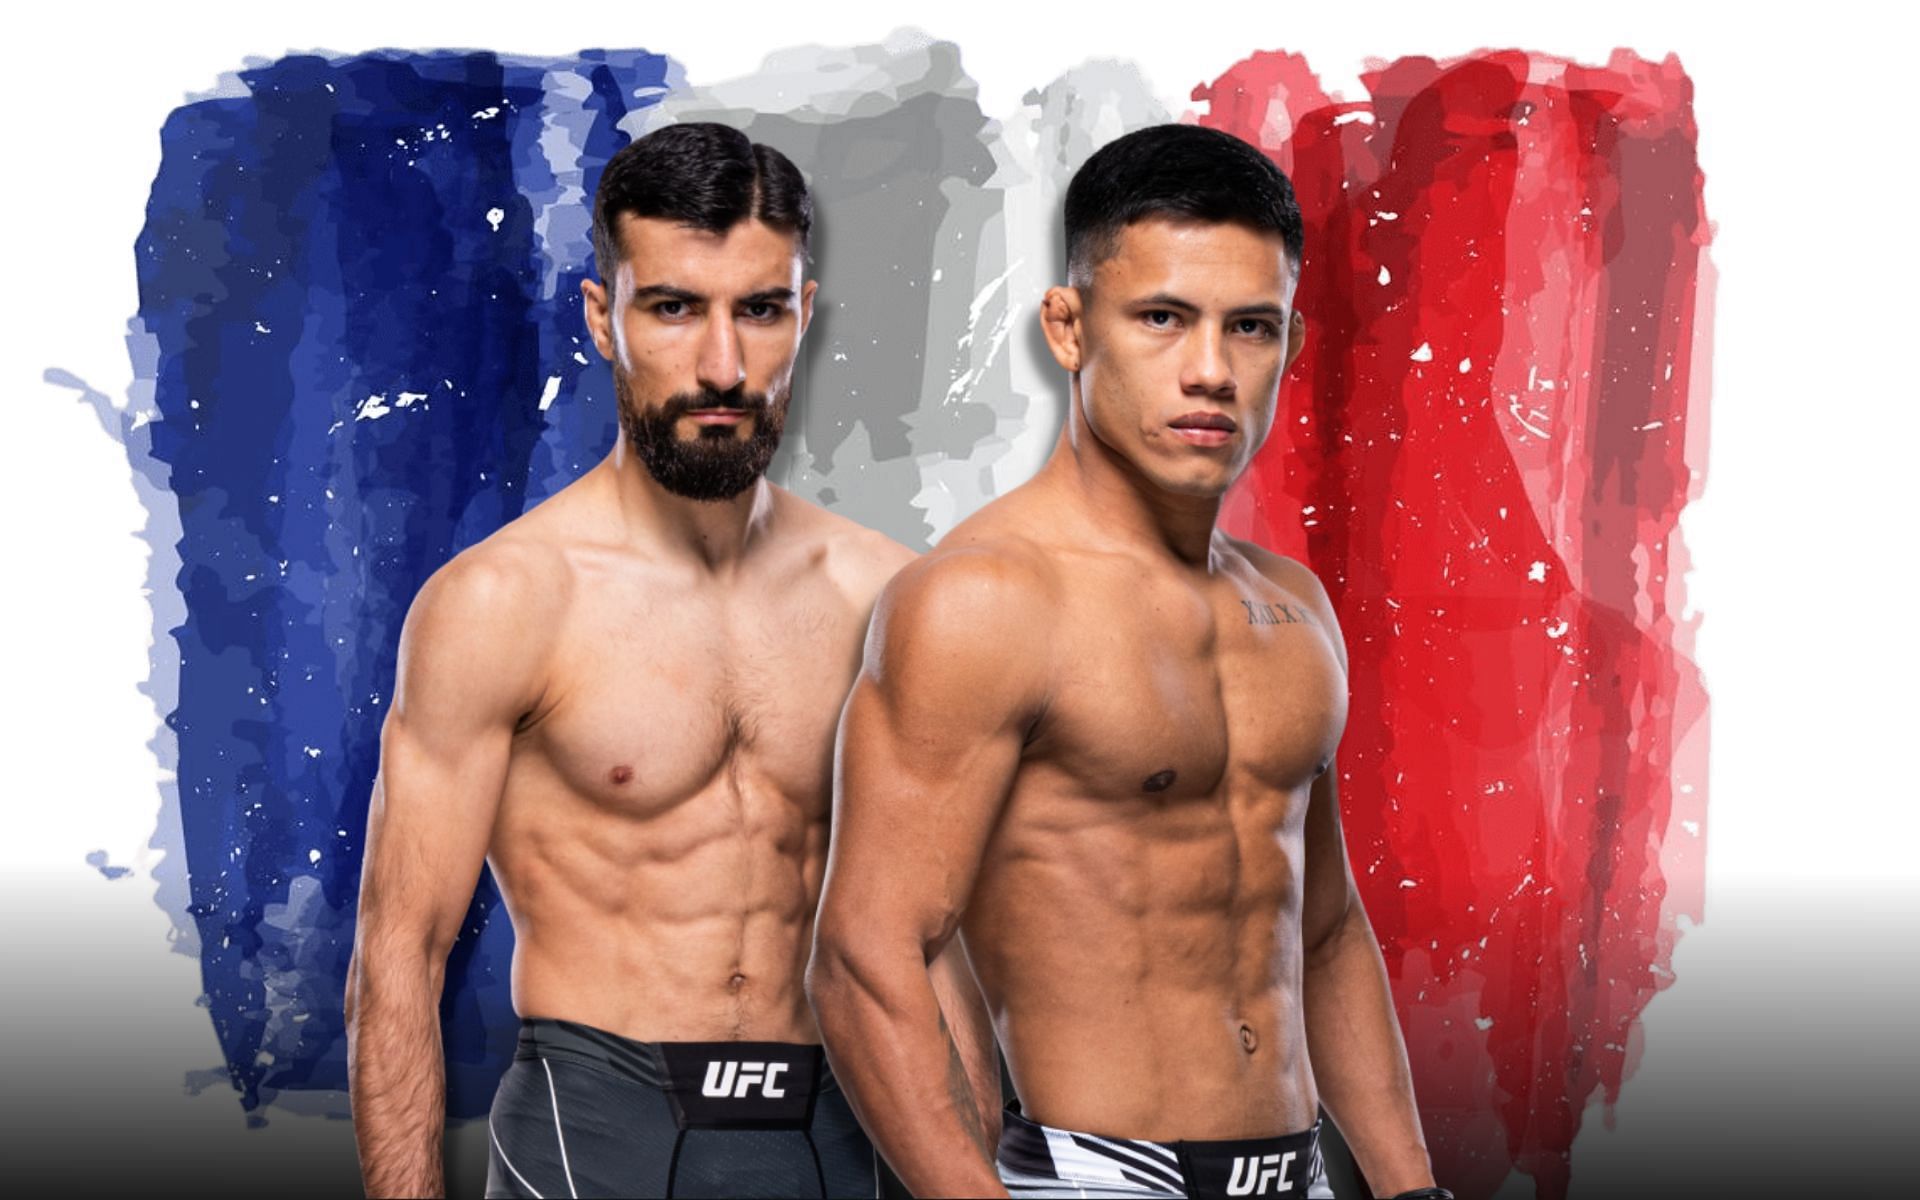 UFC Paris has a new addition. [Image credits: ufc]